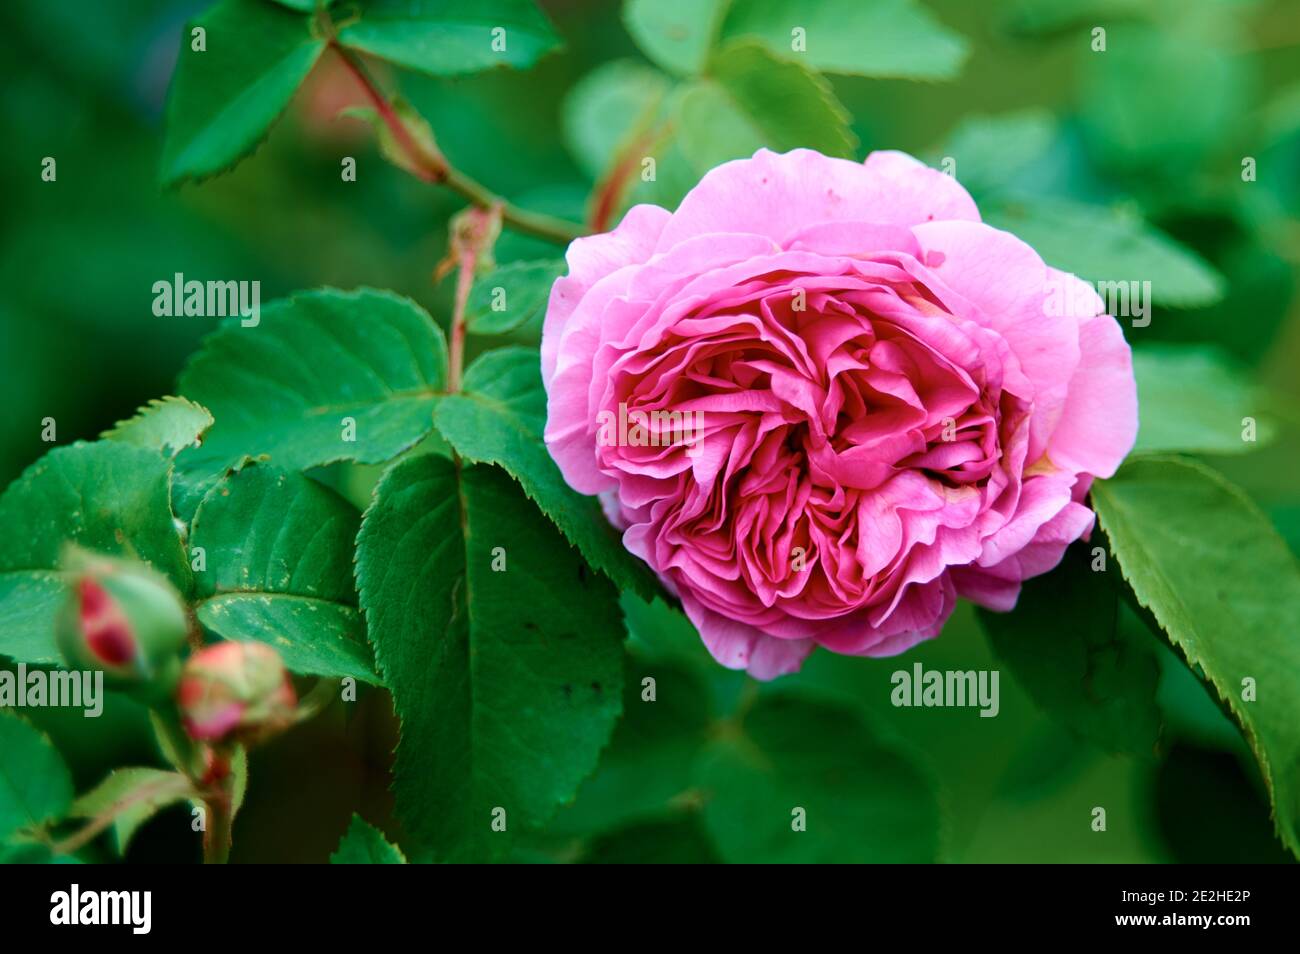 Garden rose. Pink Rose in greenery. Gardening concept. Rose bush on the street Stock Photo